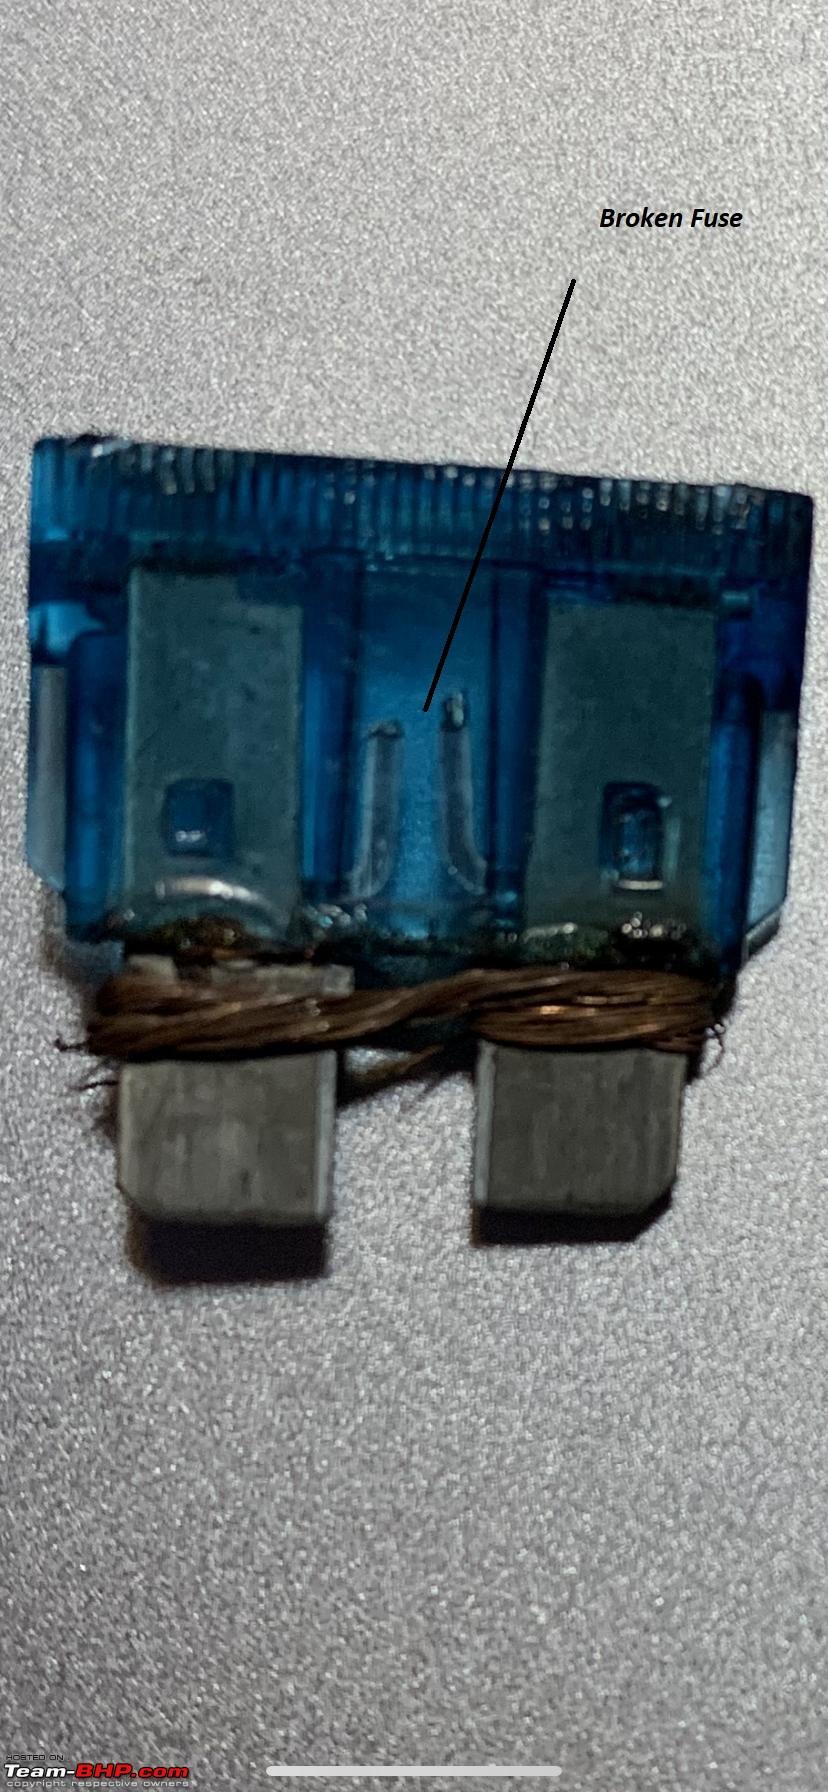 Beware of dangerous fuse repair practices at FNGs - Team-BHP